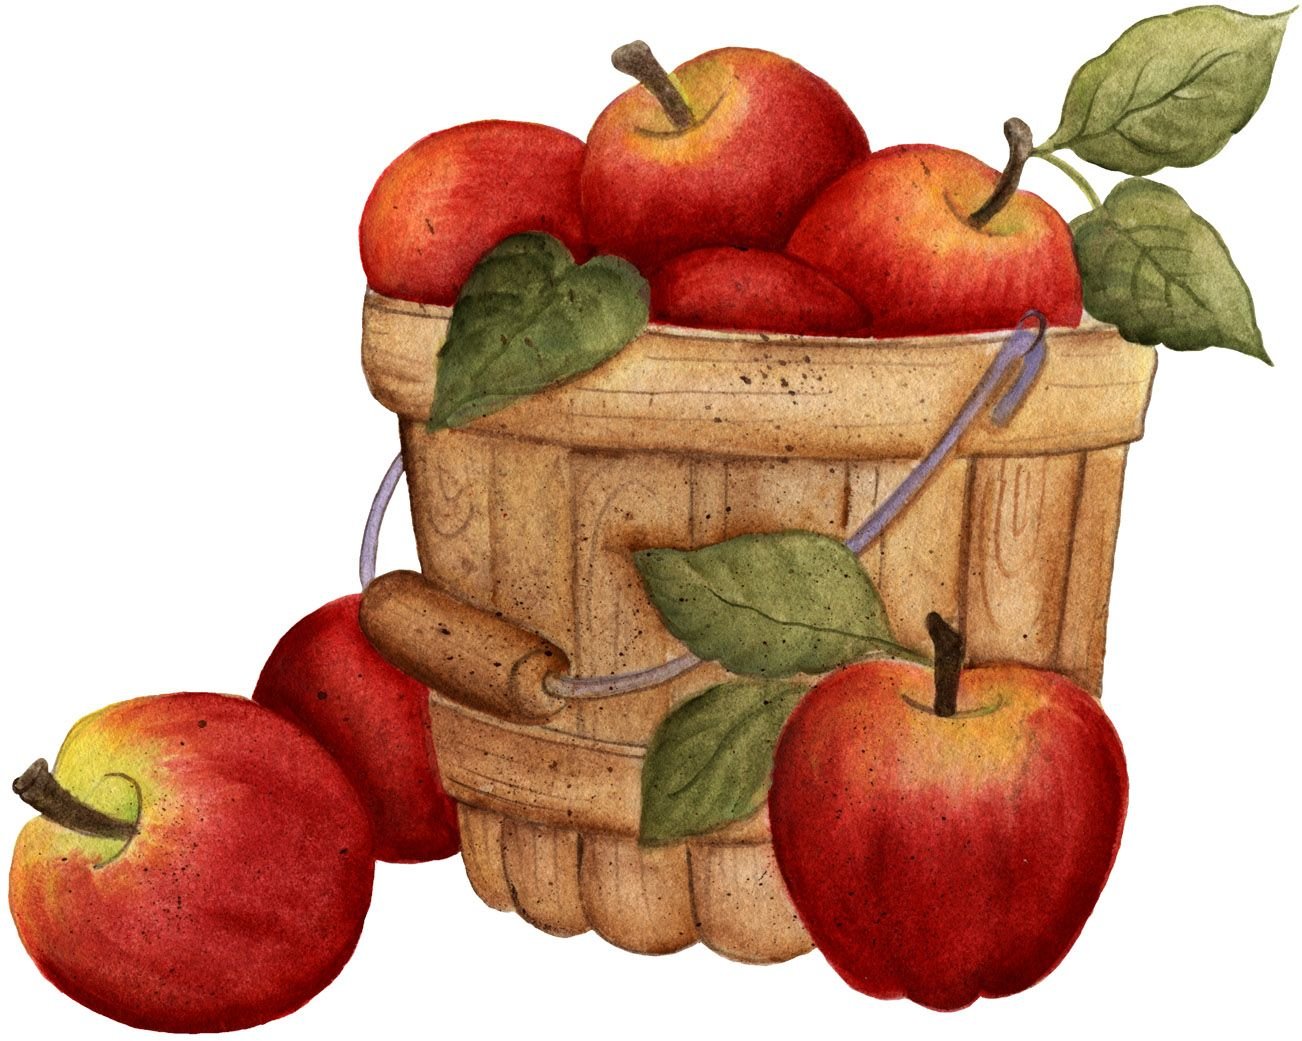 Яблоко рисунок